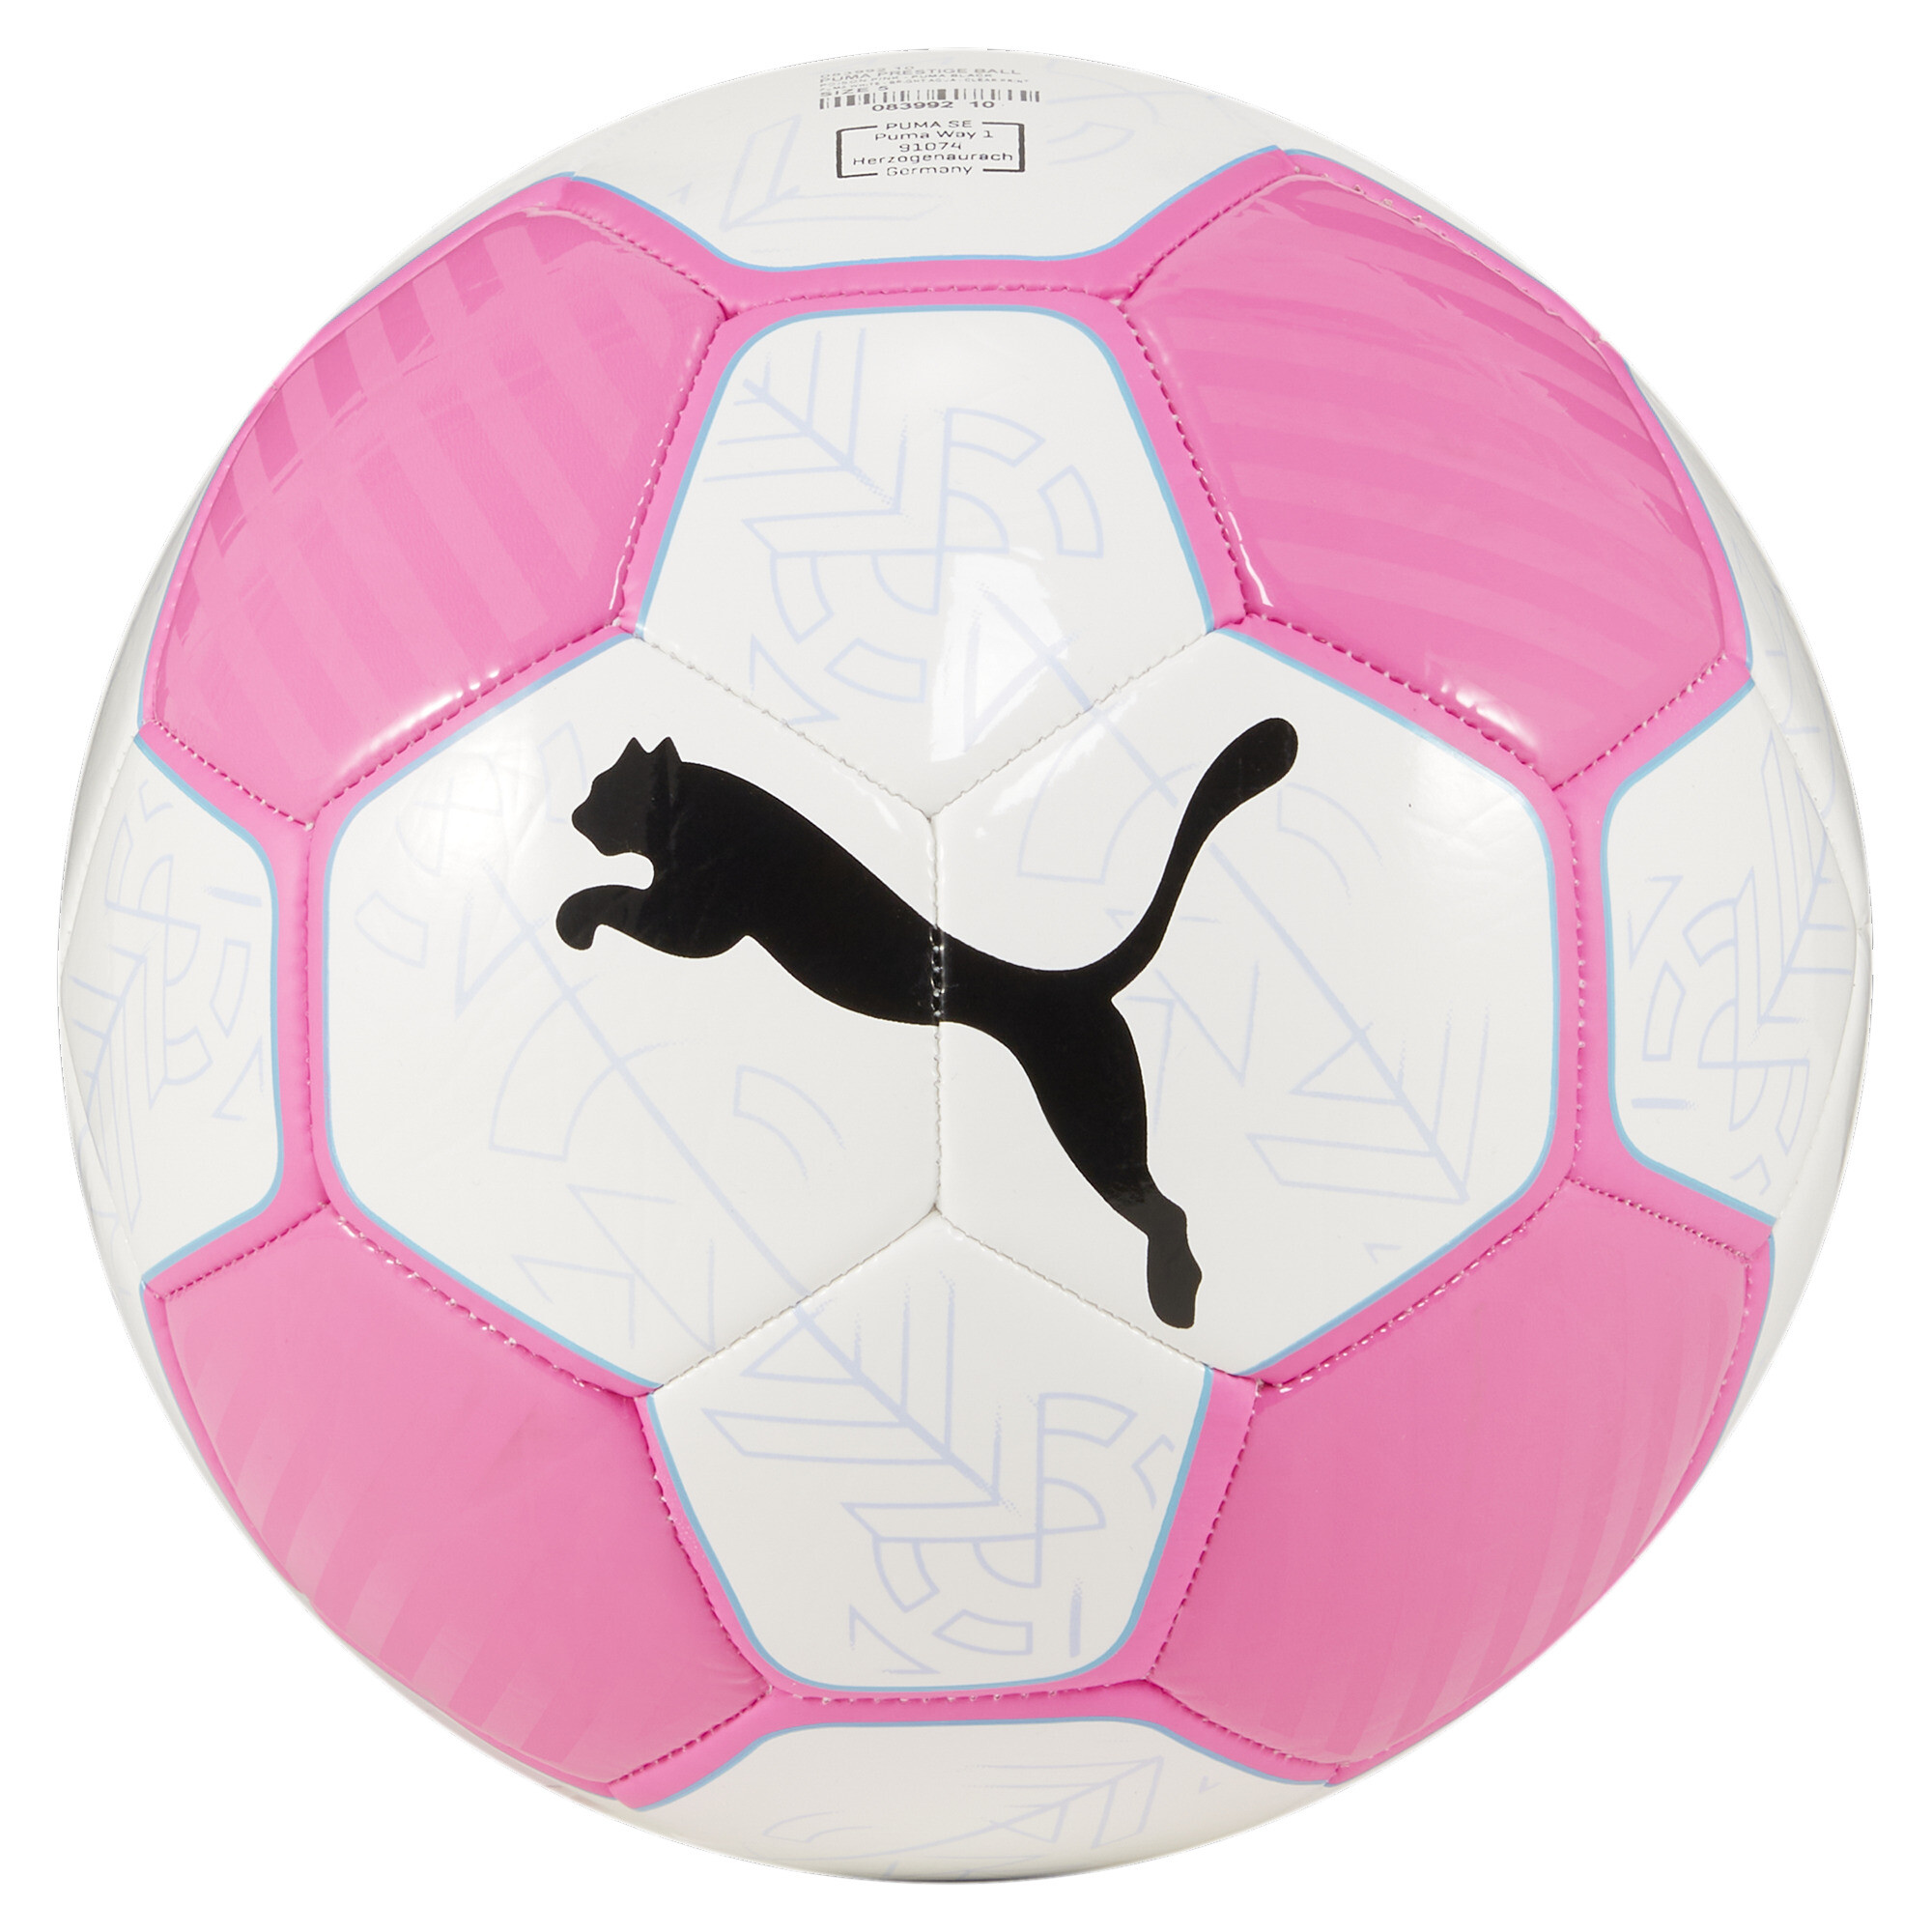 Men's PUMA Prestige Football In White/Pink, Size UK 3